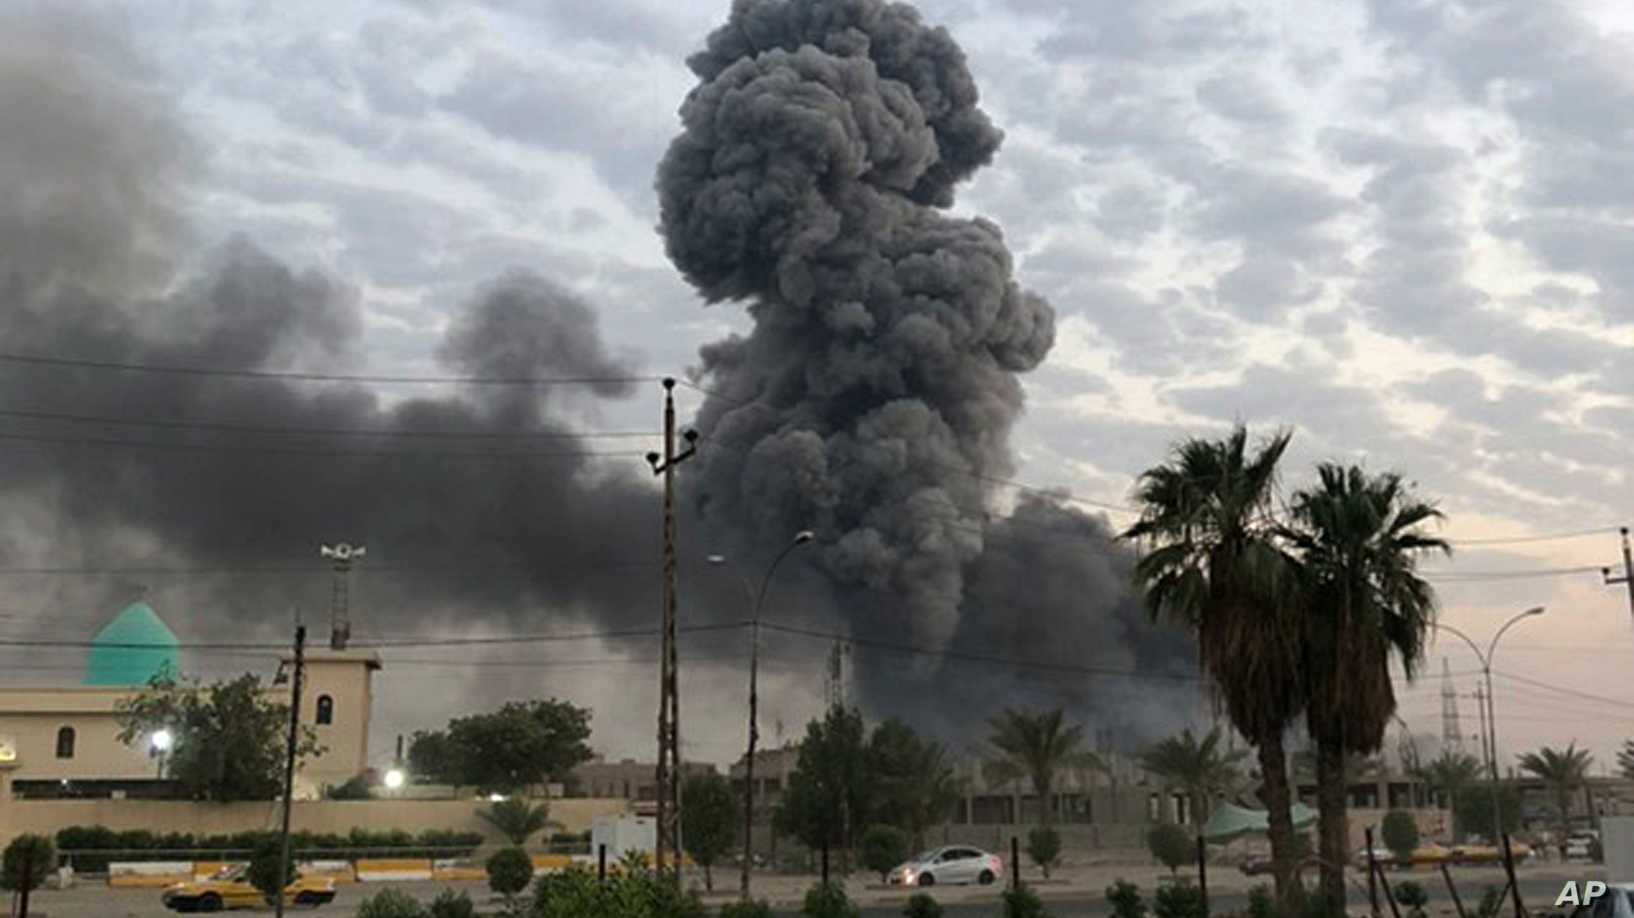 Weapons warehouse blasts frighten Iraqis-Report 